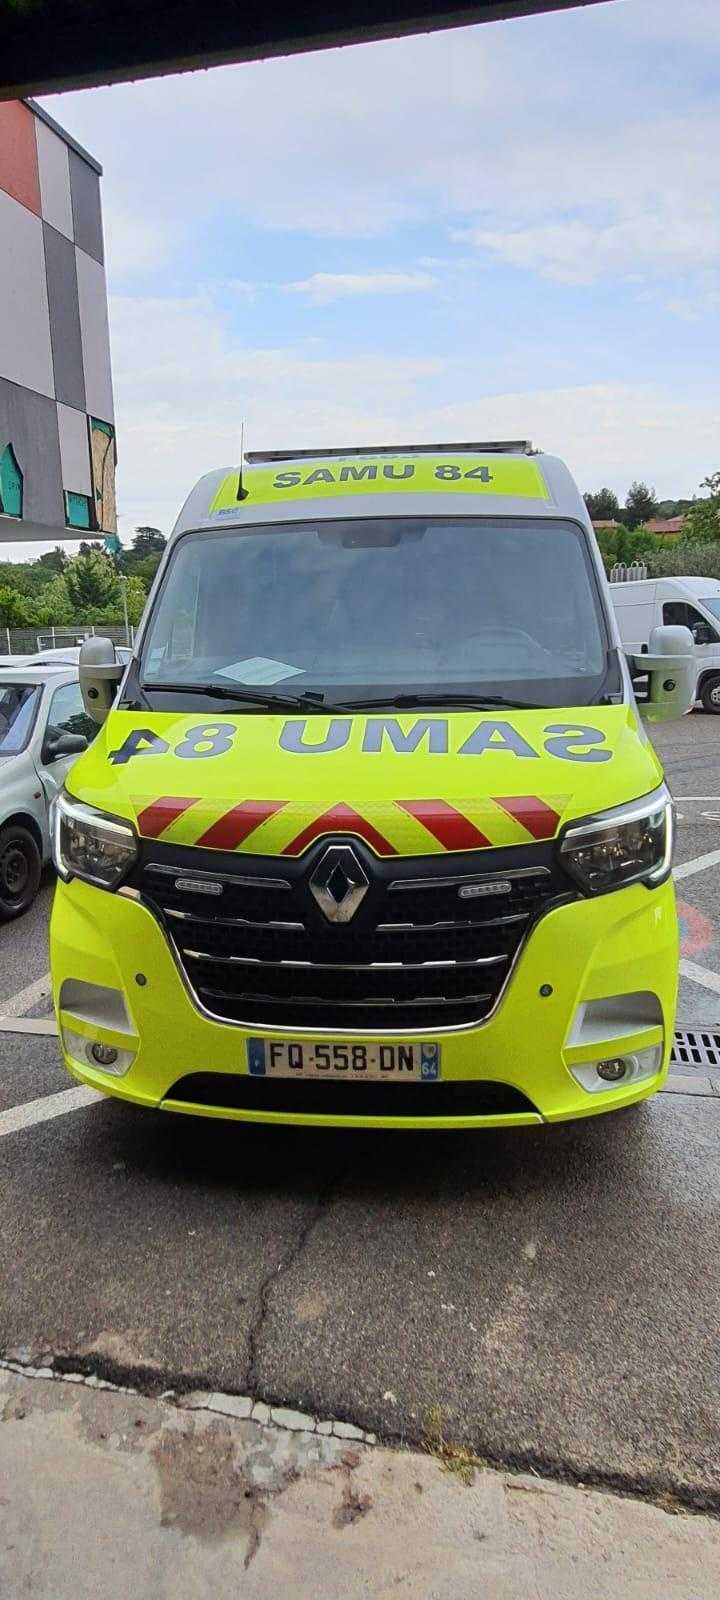 Flocage Ambulance, covering samu